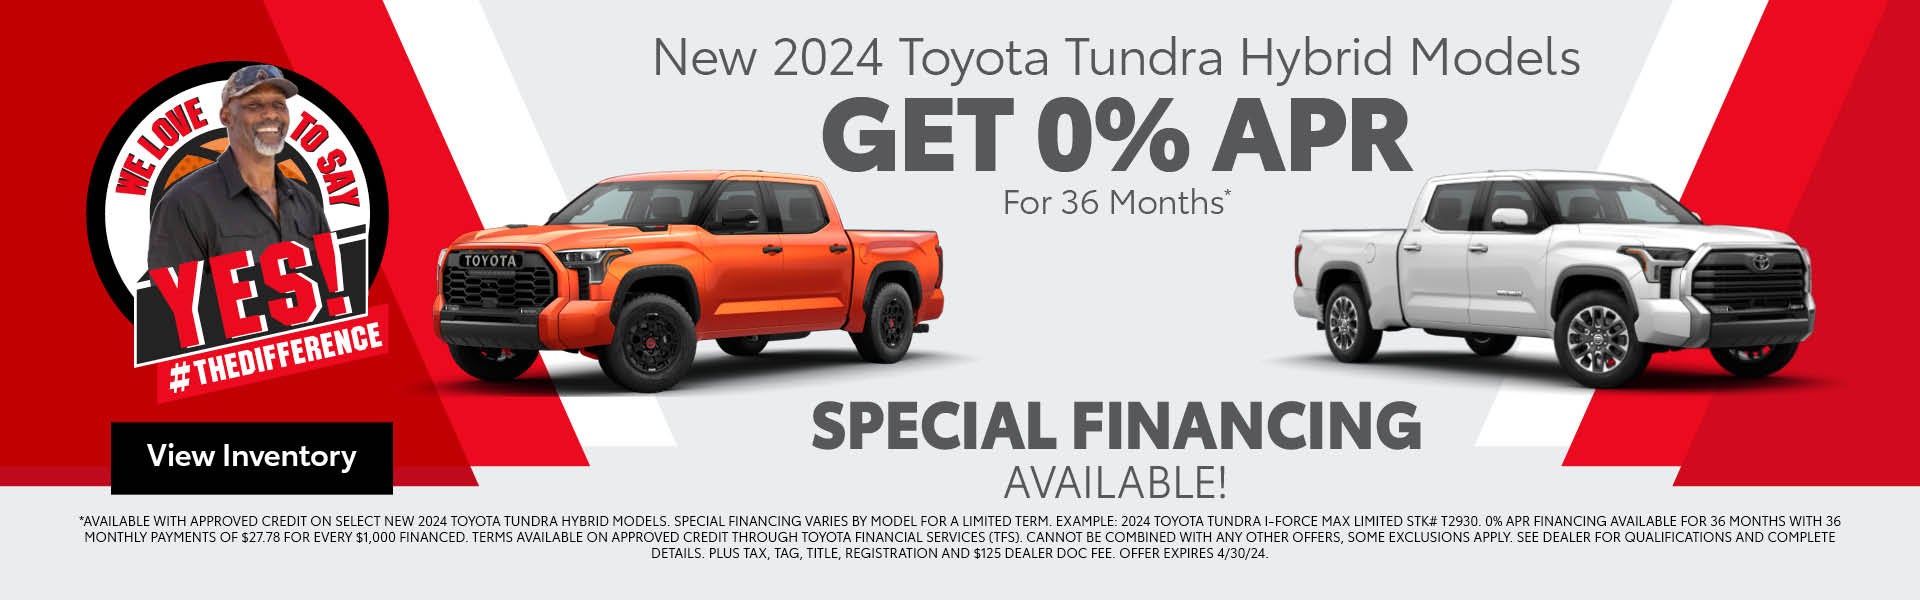 New Toyota Tundra Hybrid Models in El Dorado AR 